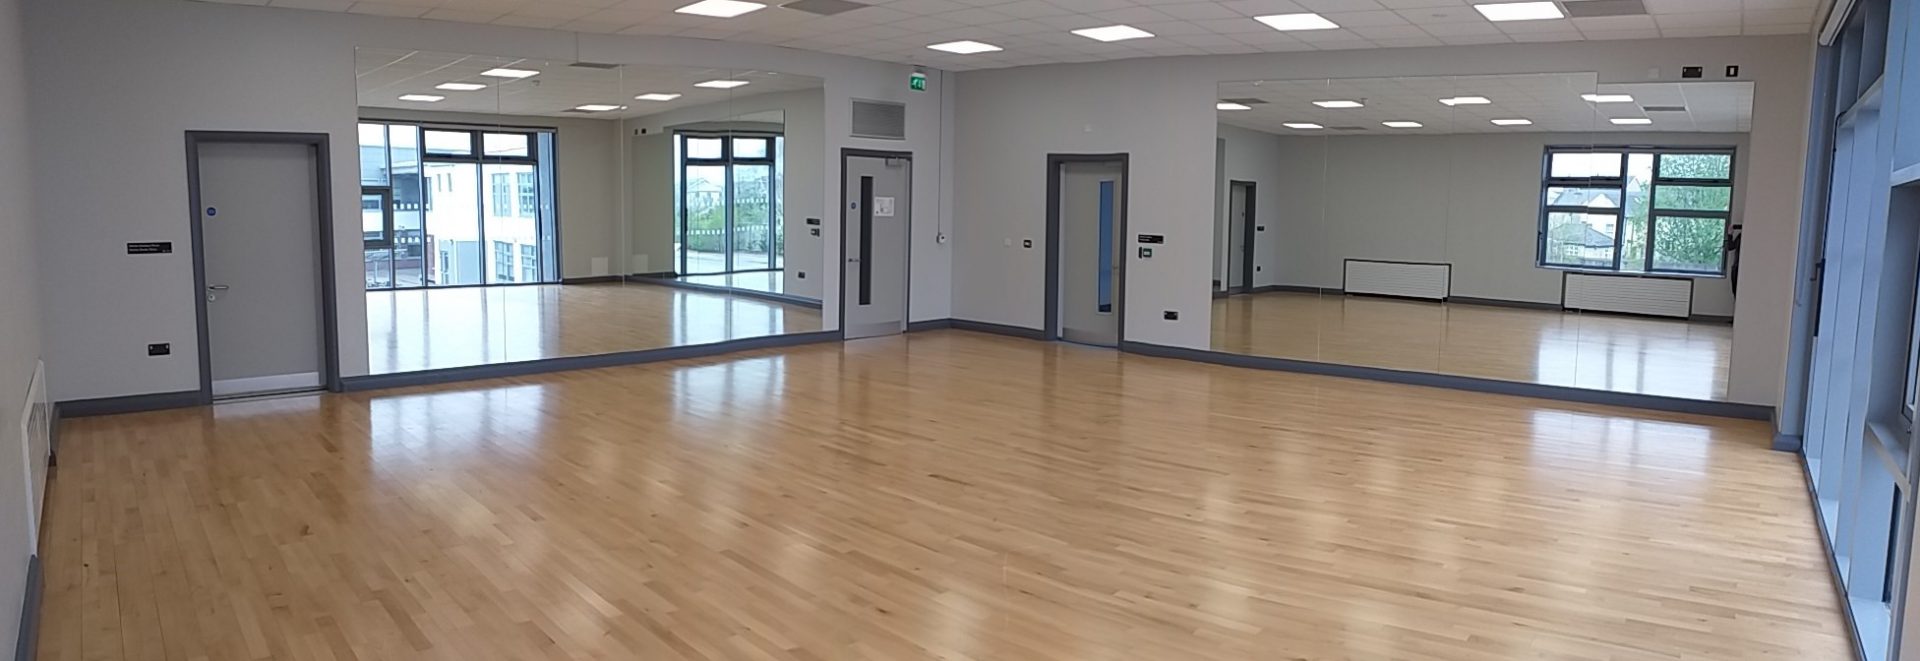 Luttrellstown Community Centre - Dance Studio